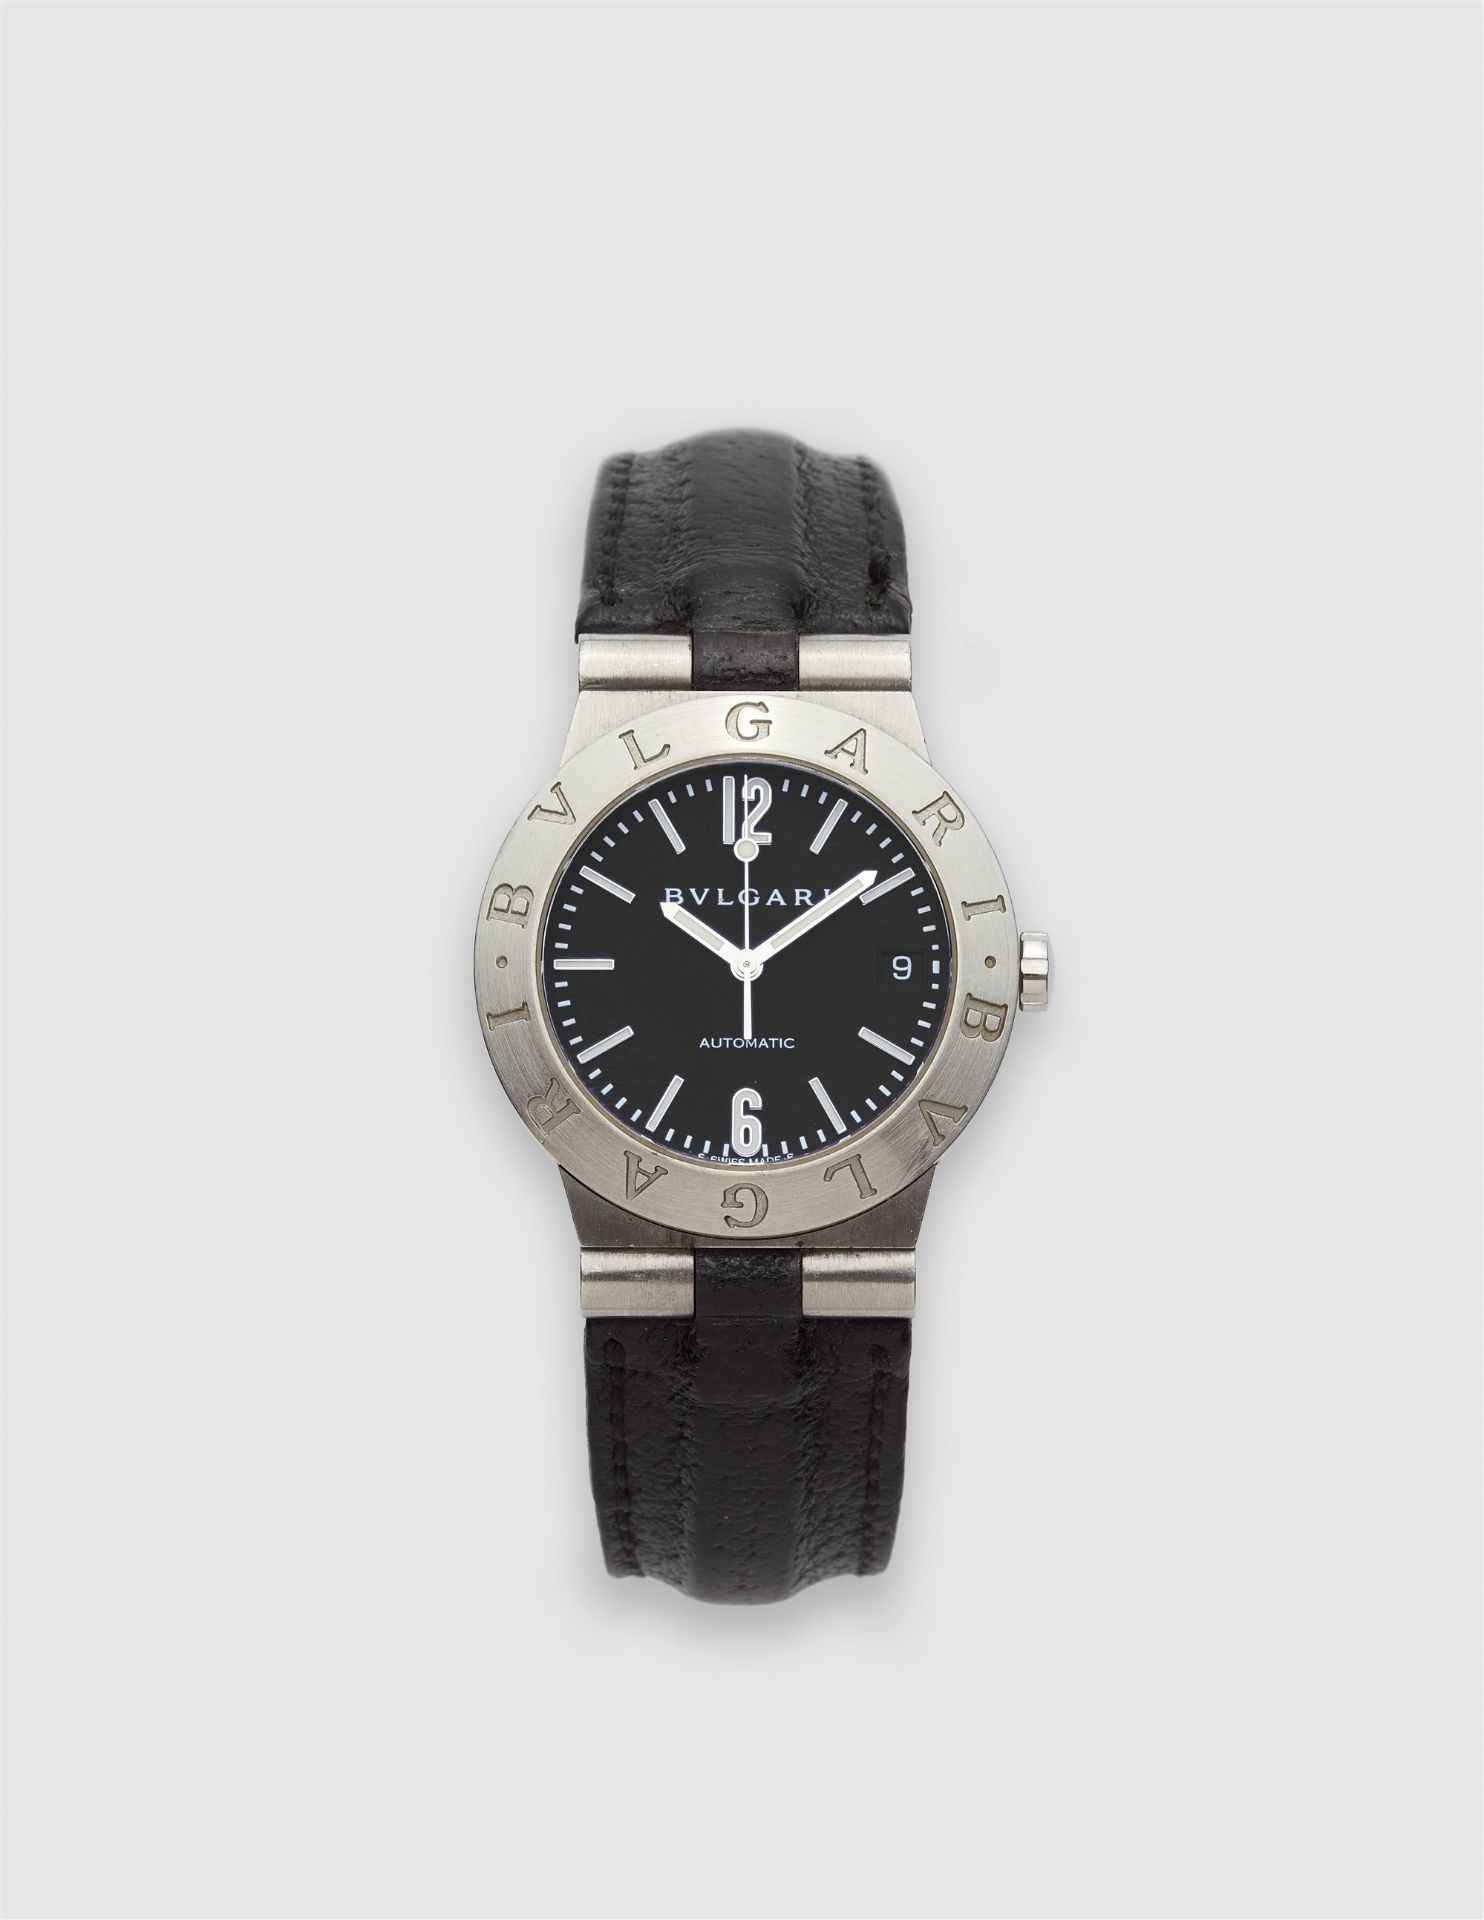 A automatic stainless steel Bulgari gentleman's wristwatch.